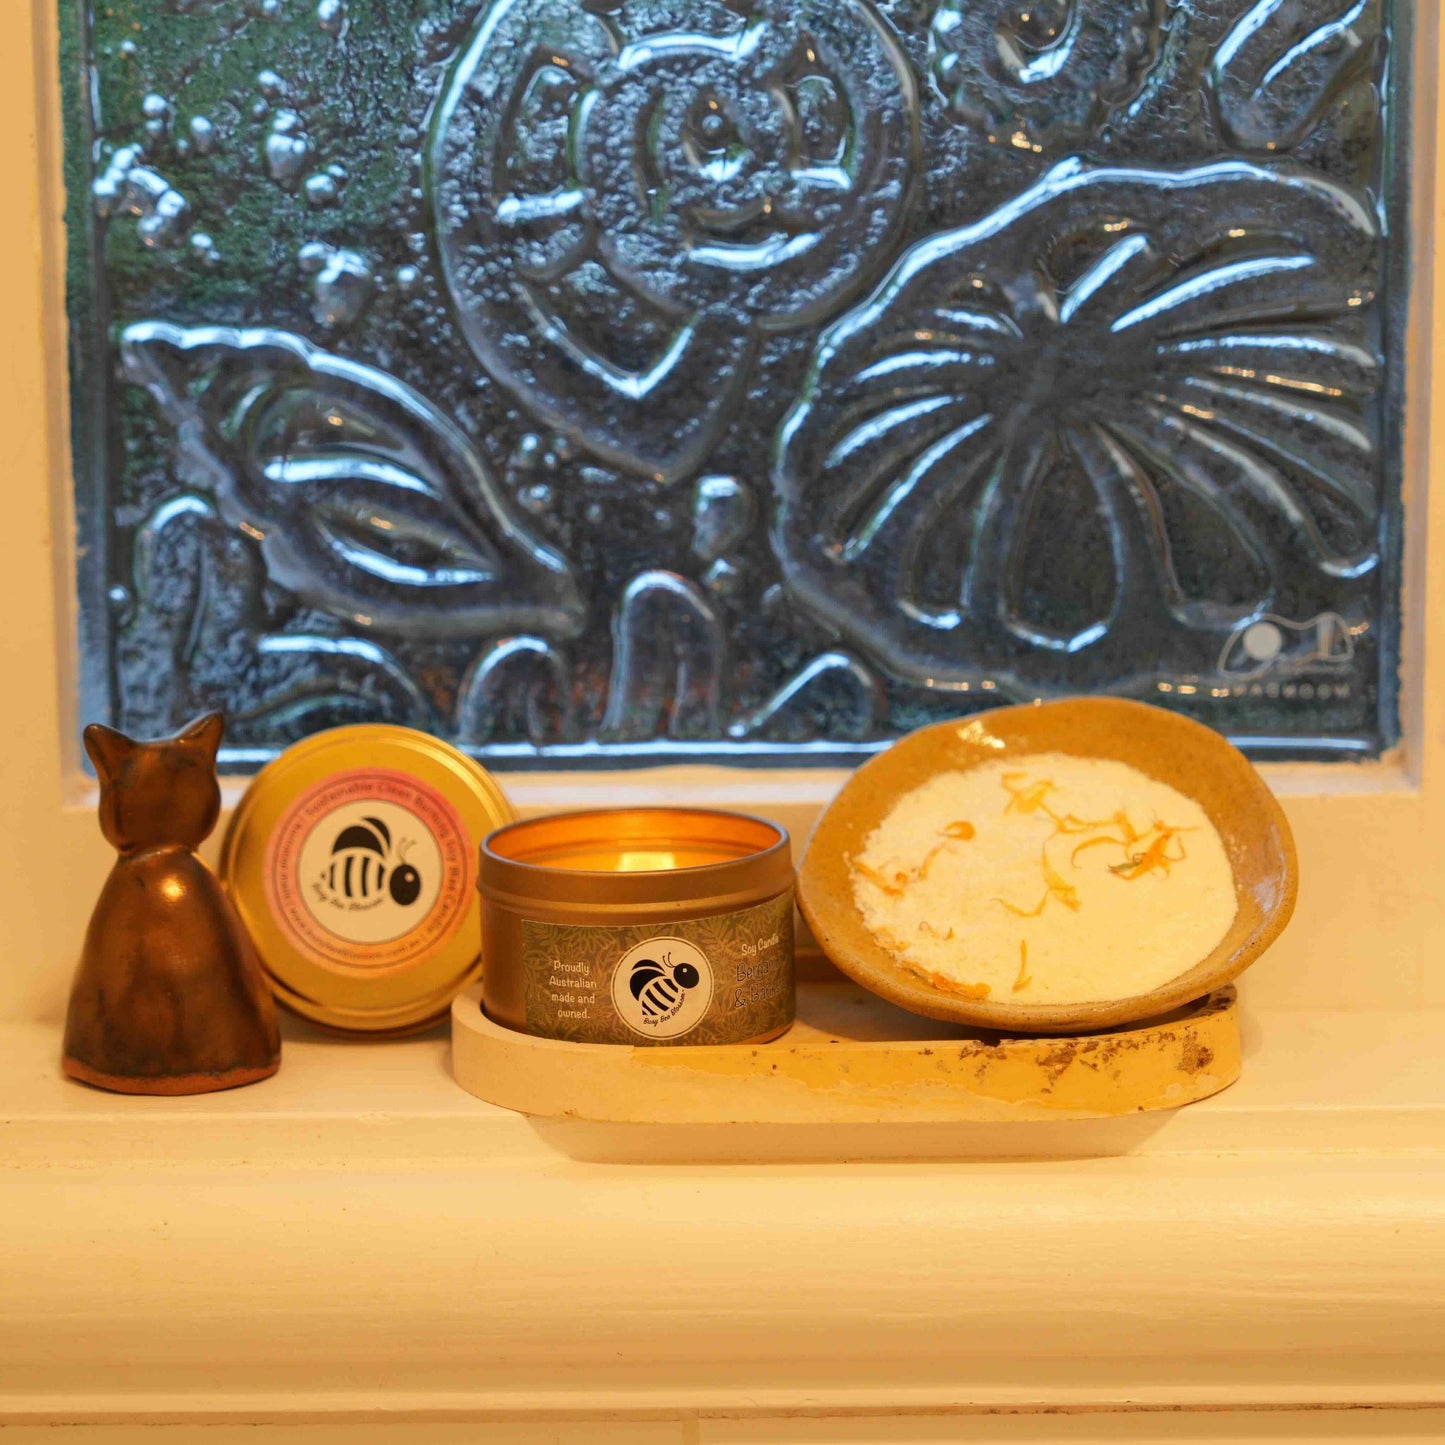 Bergamot and Banksia travel tin candle lit with Candle snuffer and Lemon Calendula Milk Bath Soak on bathroom window sill